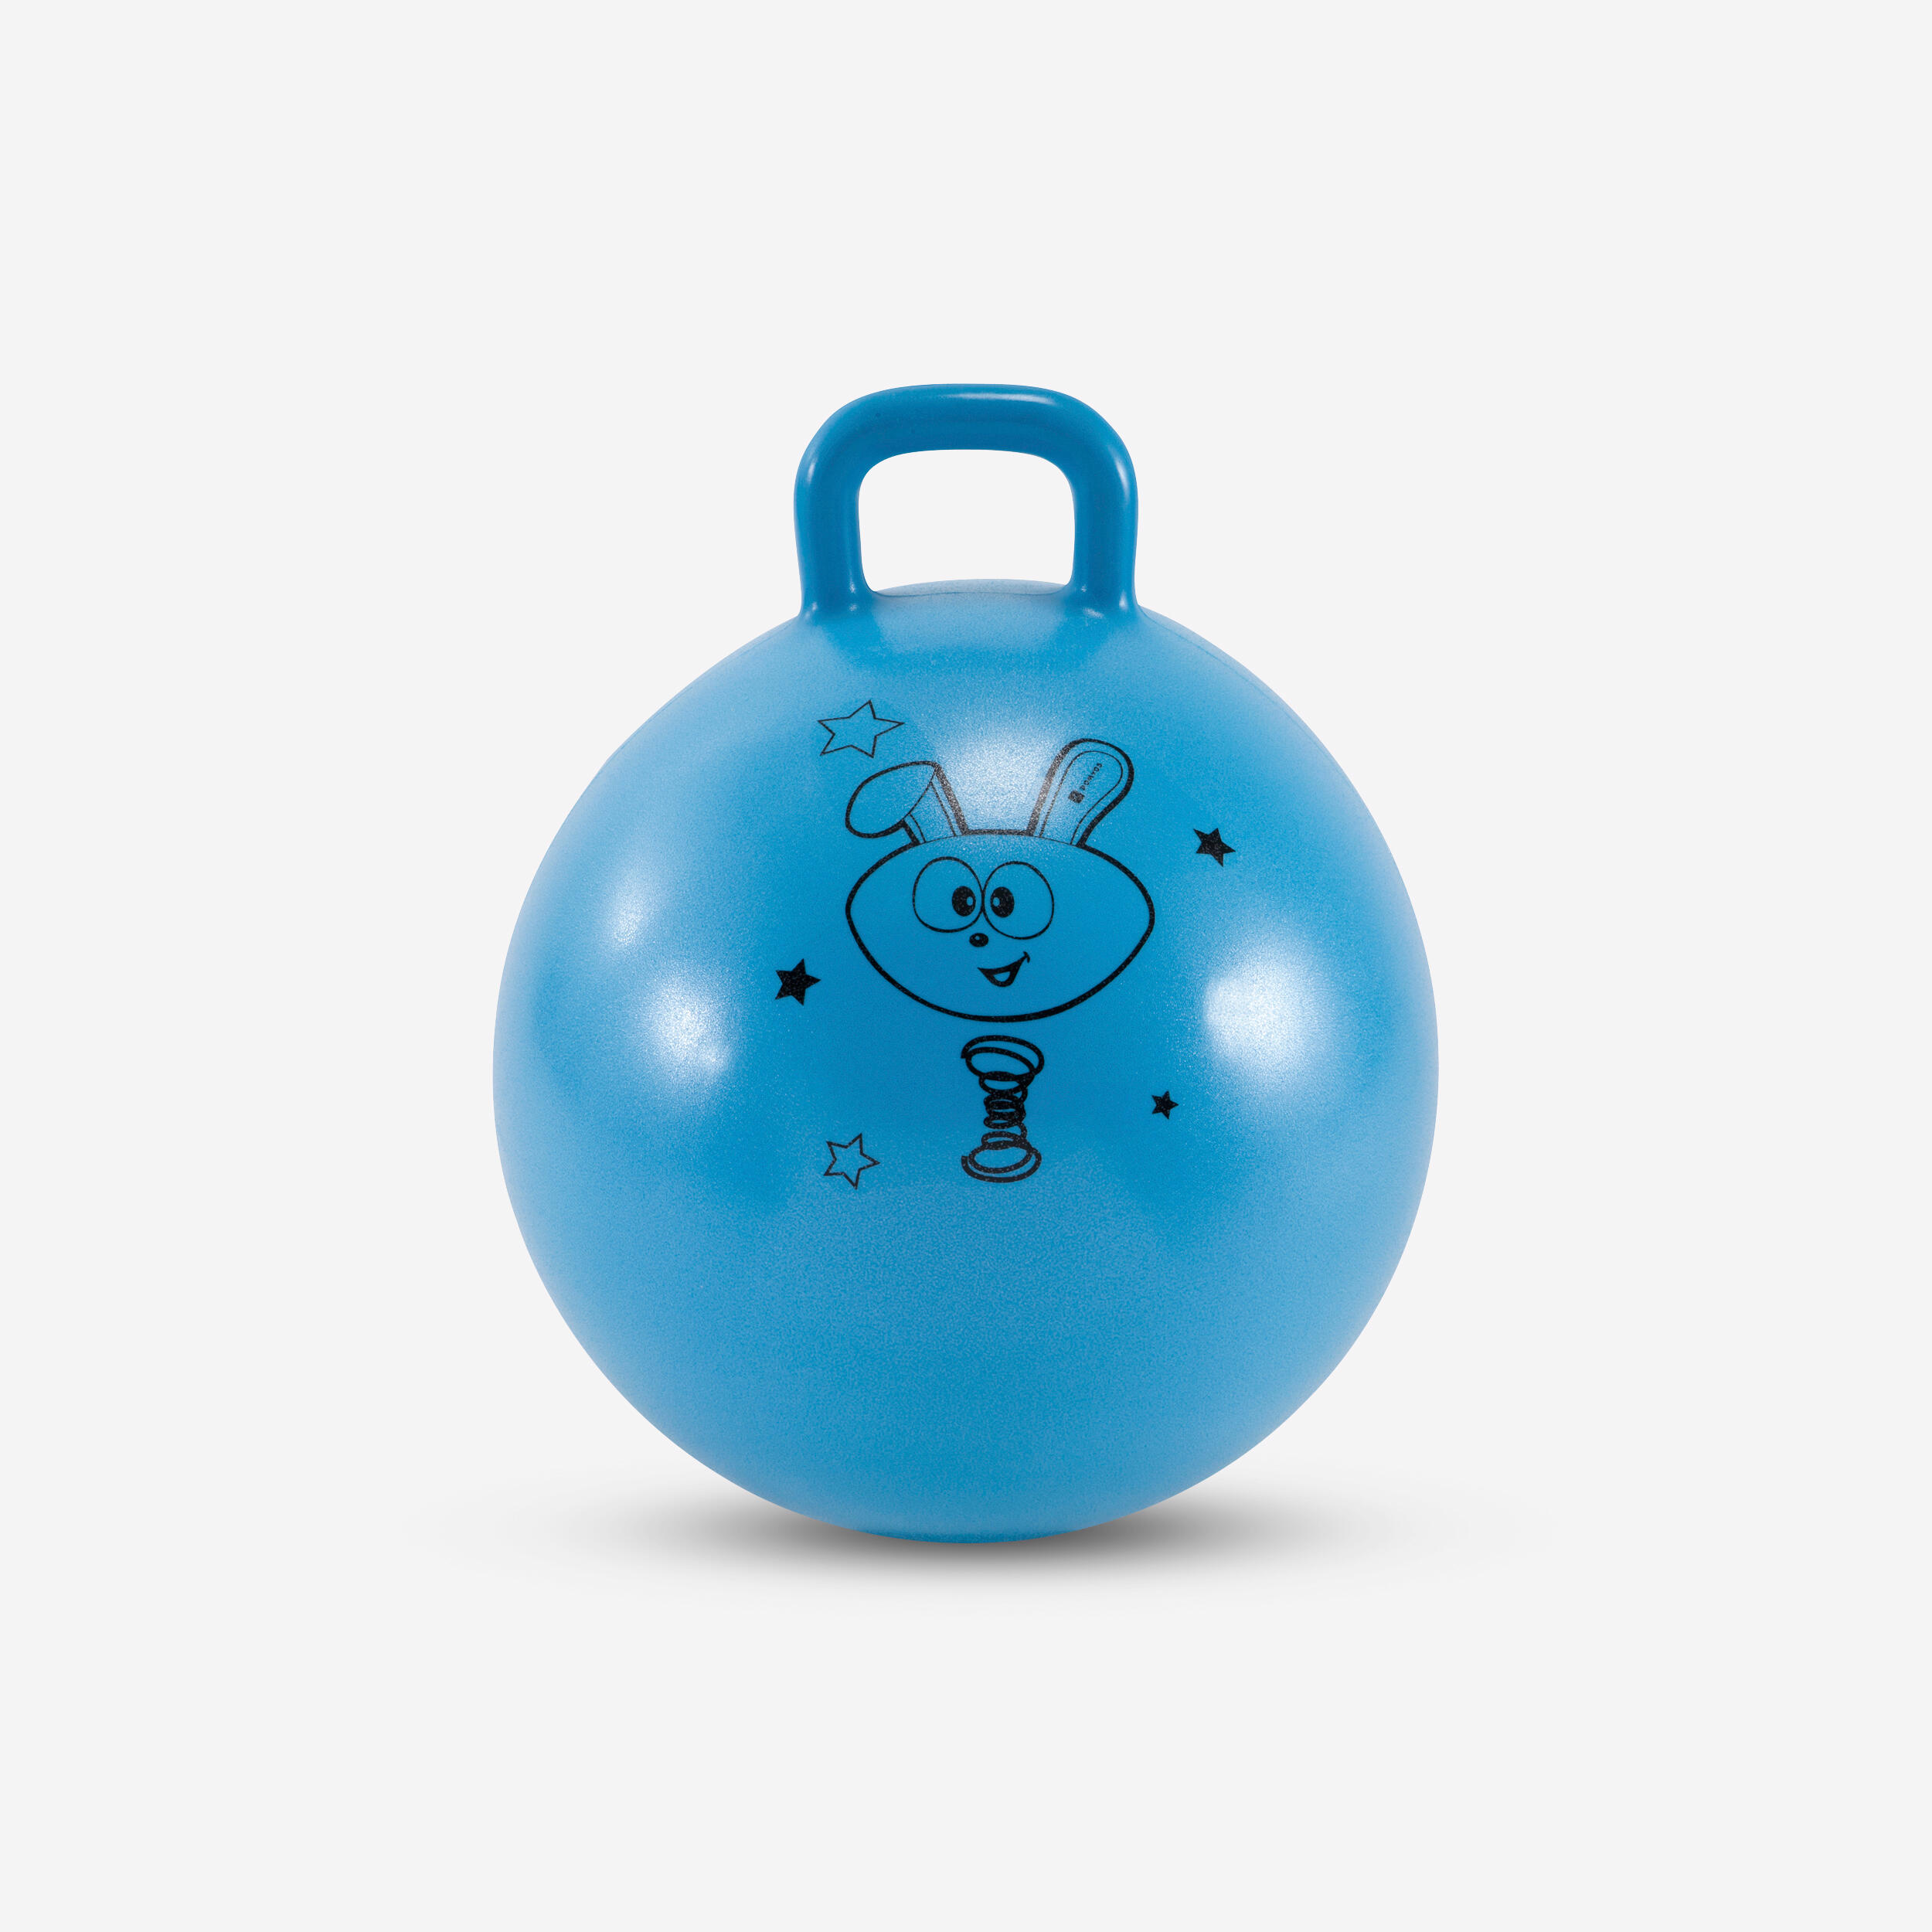 Ballon sauteur enfant - 45 cm bleu - Bleu - Domyos - Décathlon